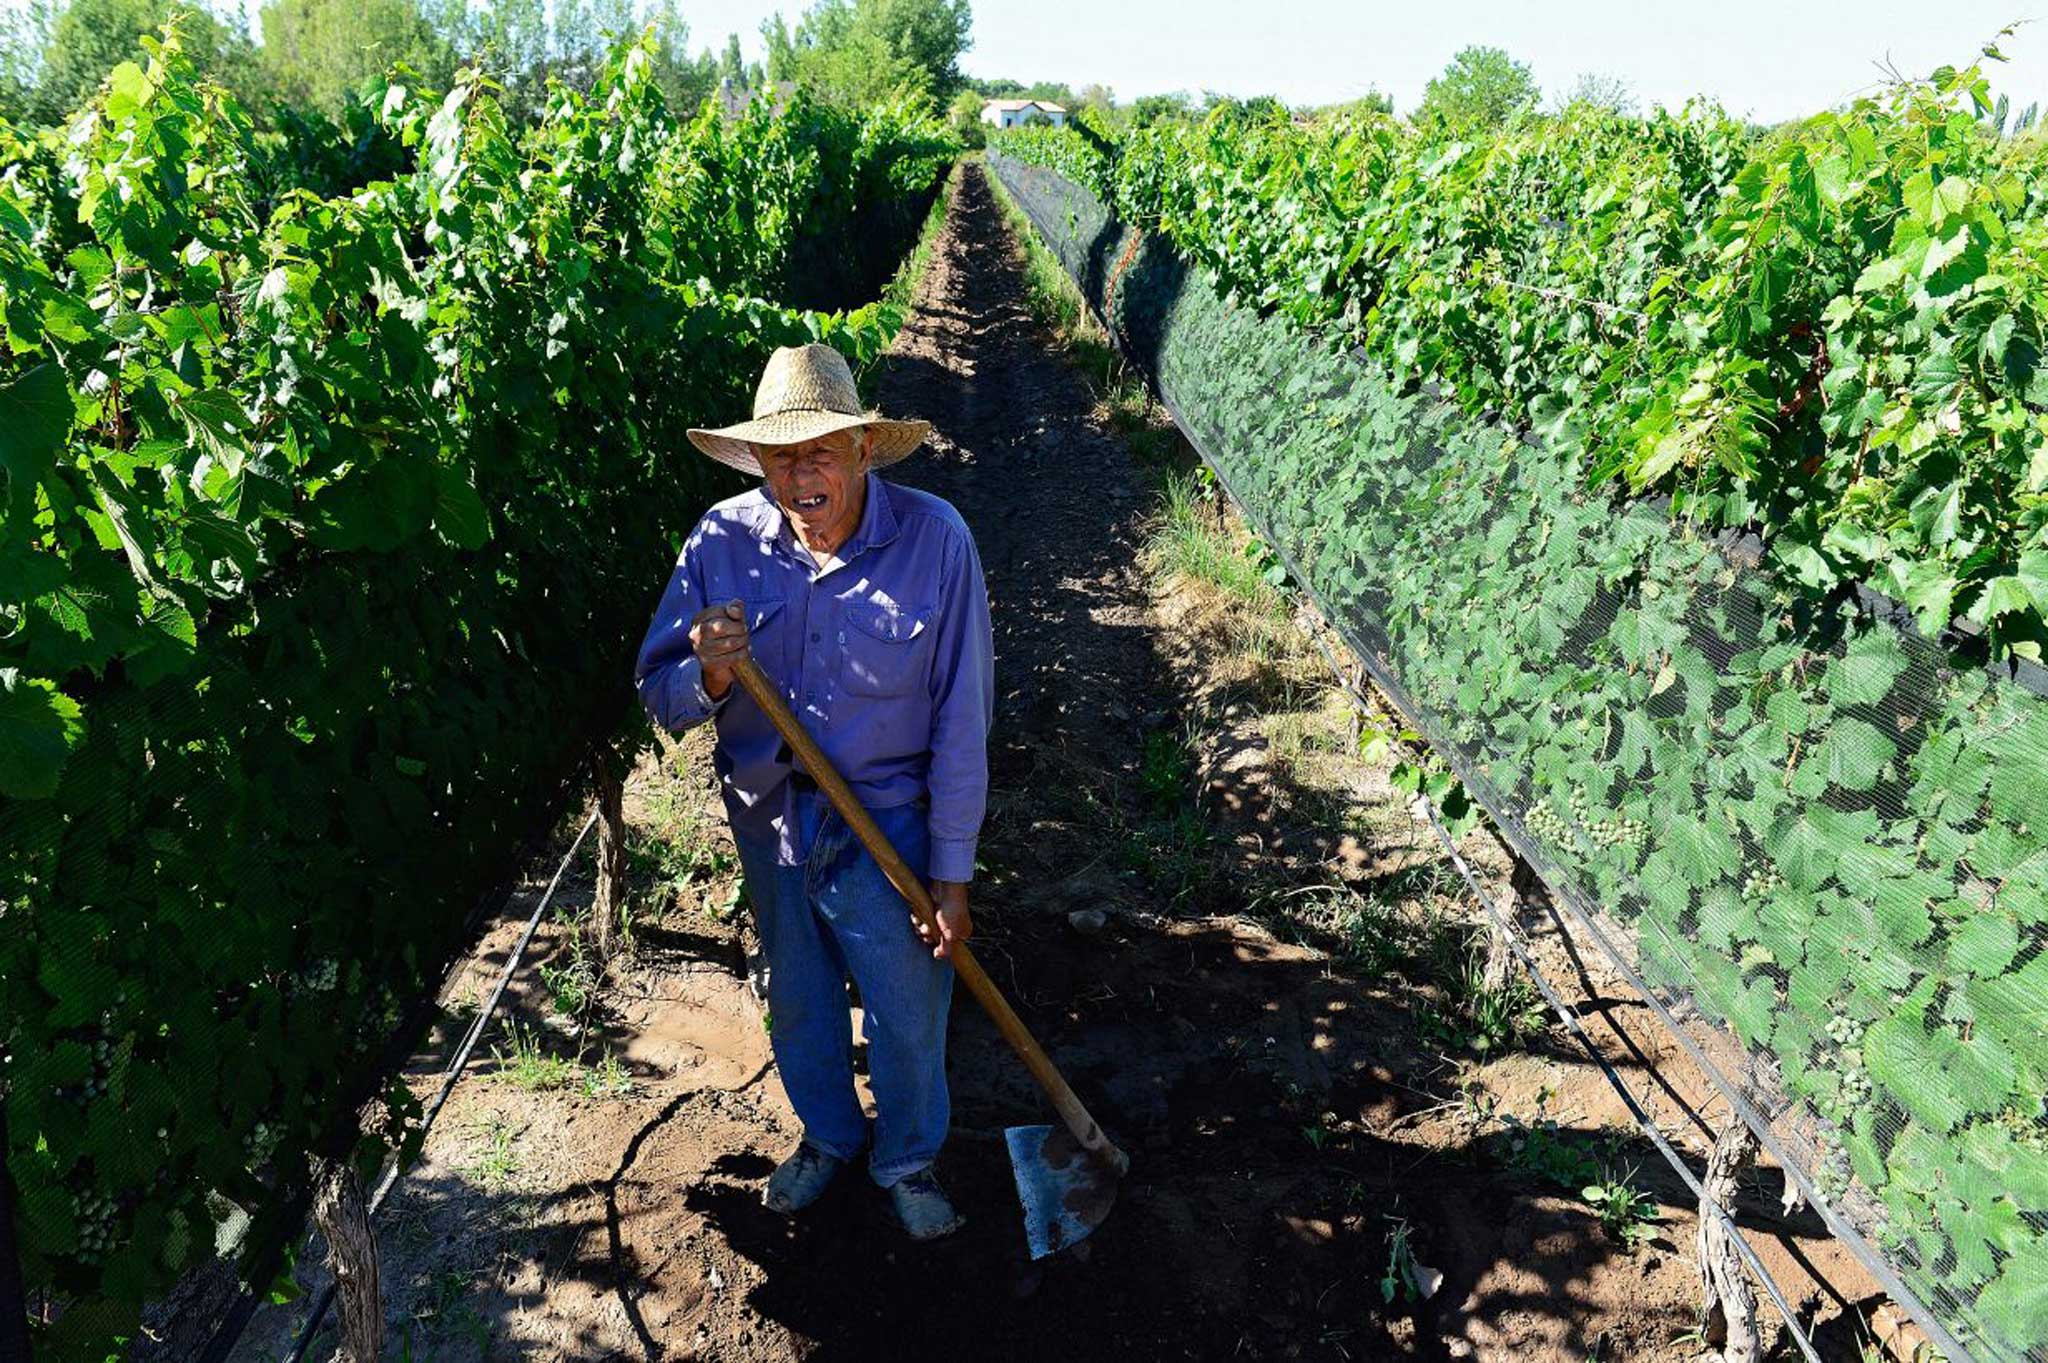 A man tends a vineyard in Mendoza, Argentina